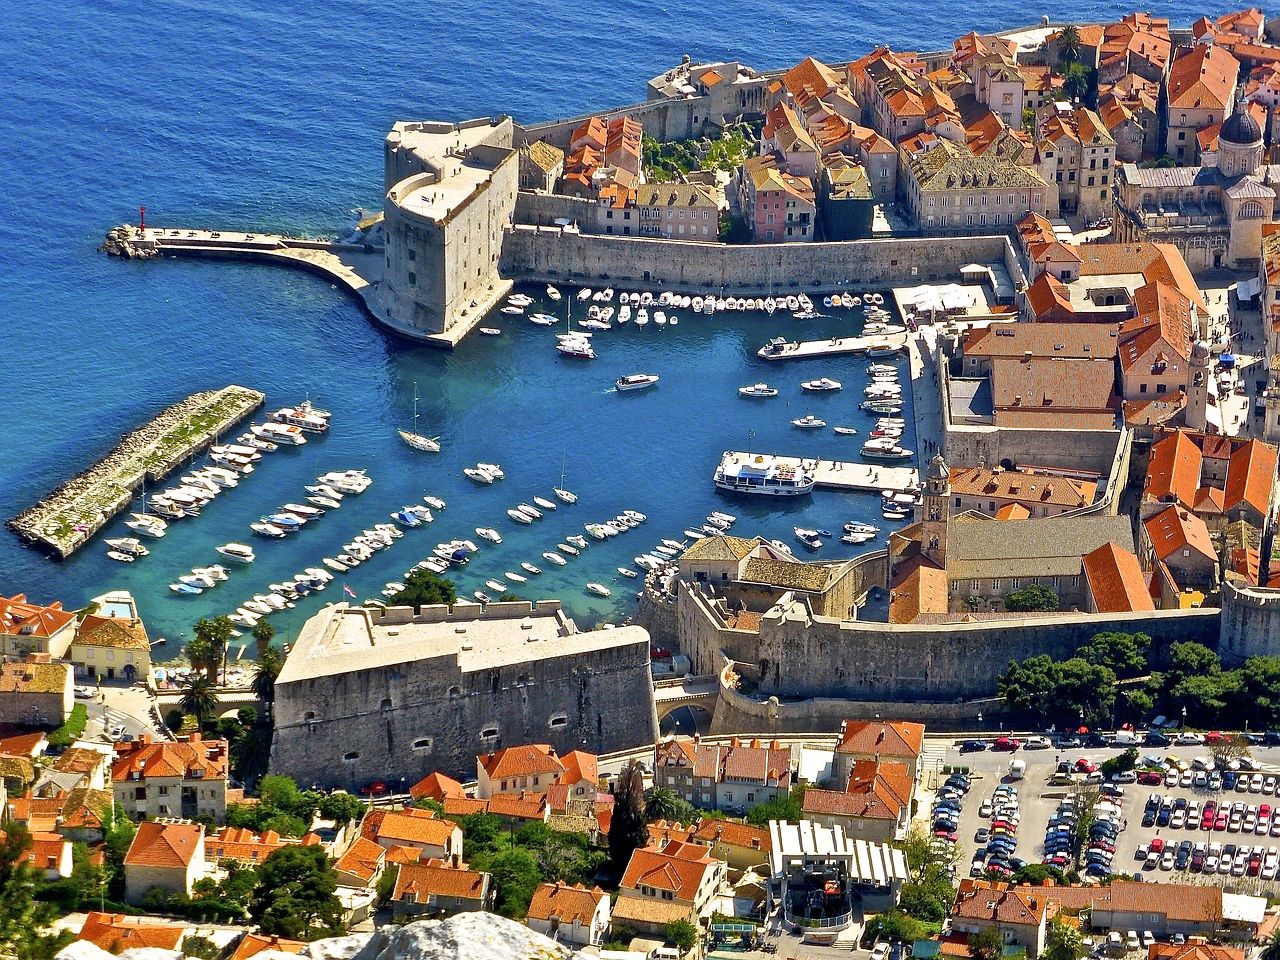 Aerial view of Dubrovnik's harbor